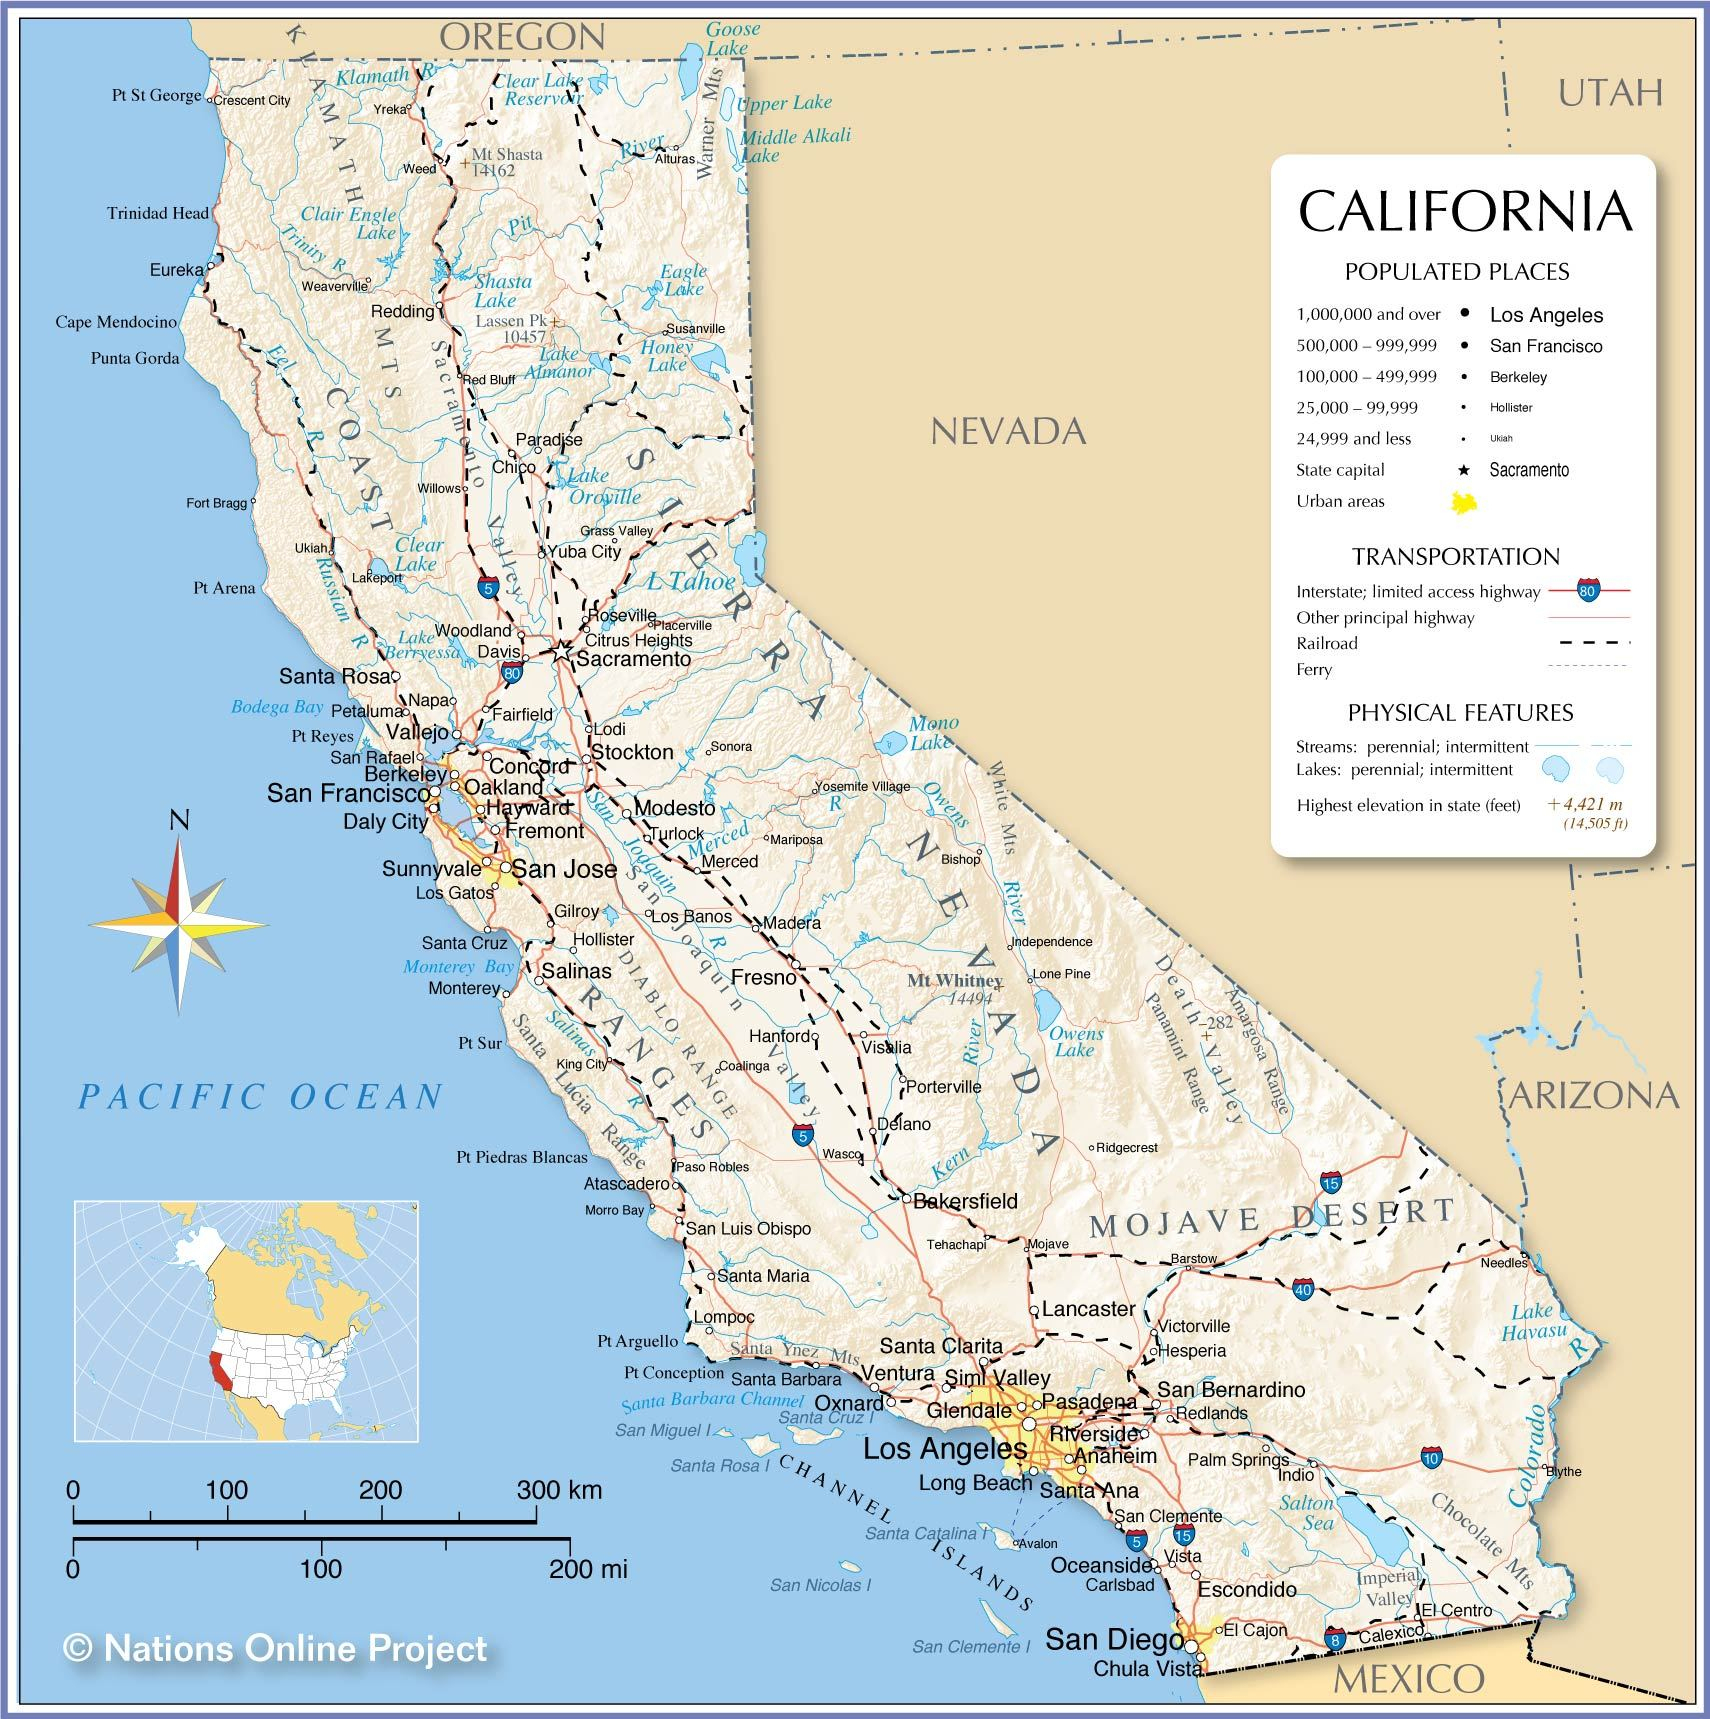 Google Maps Ventura California - Klipy - Google Maps Oxnard California